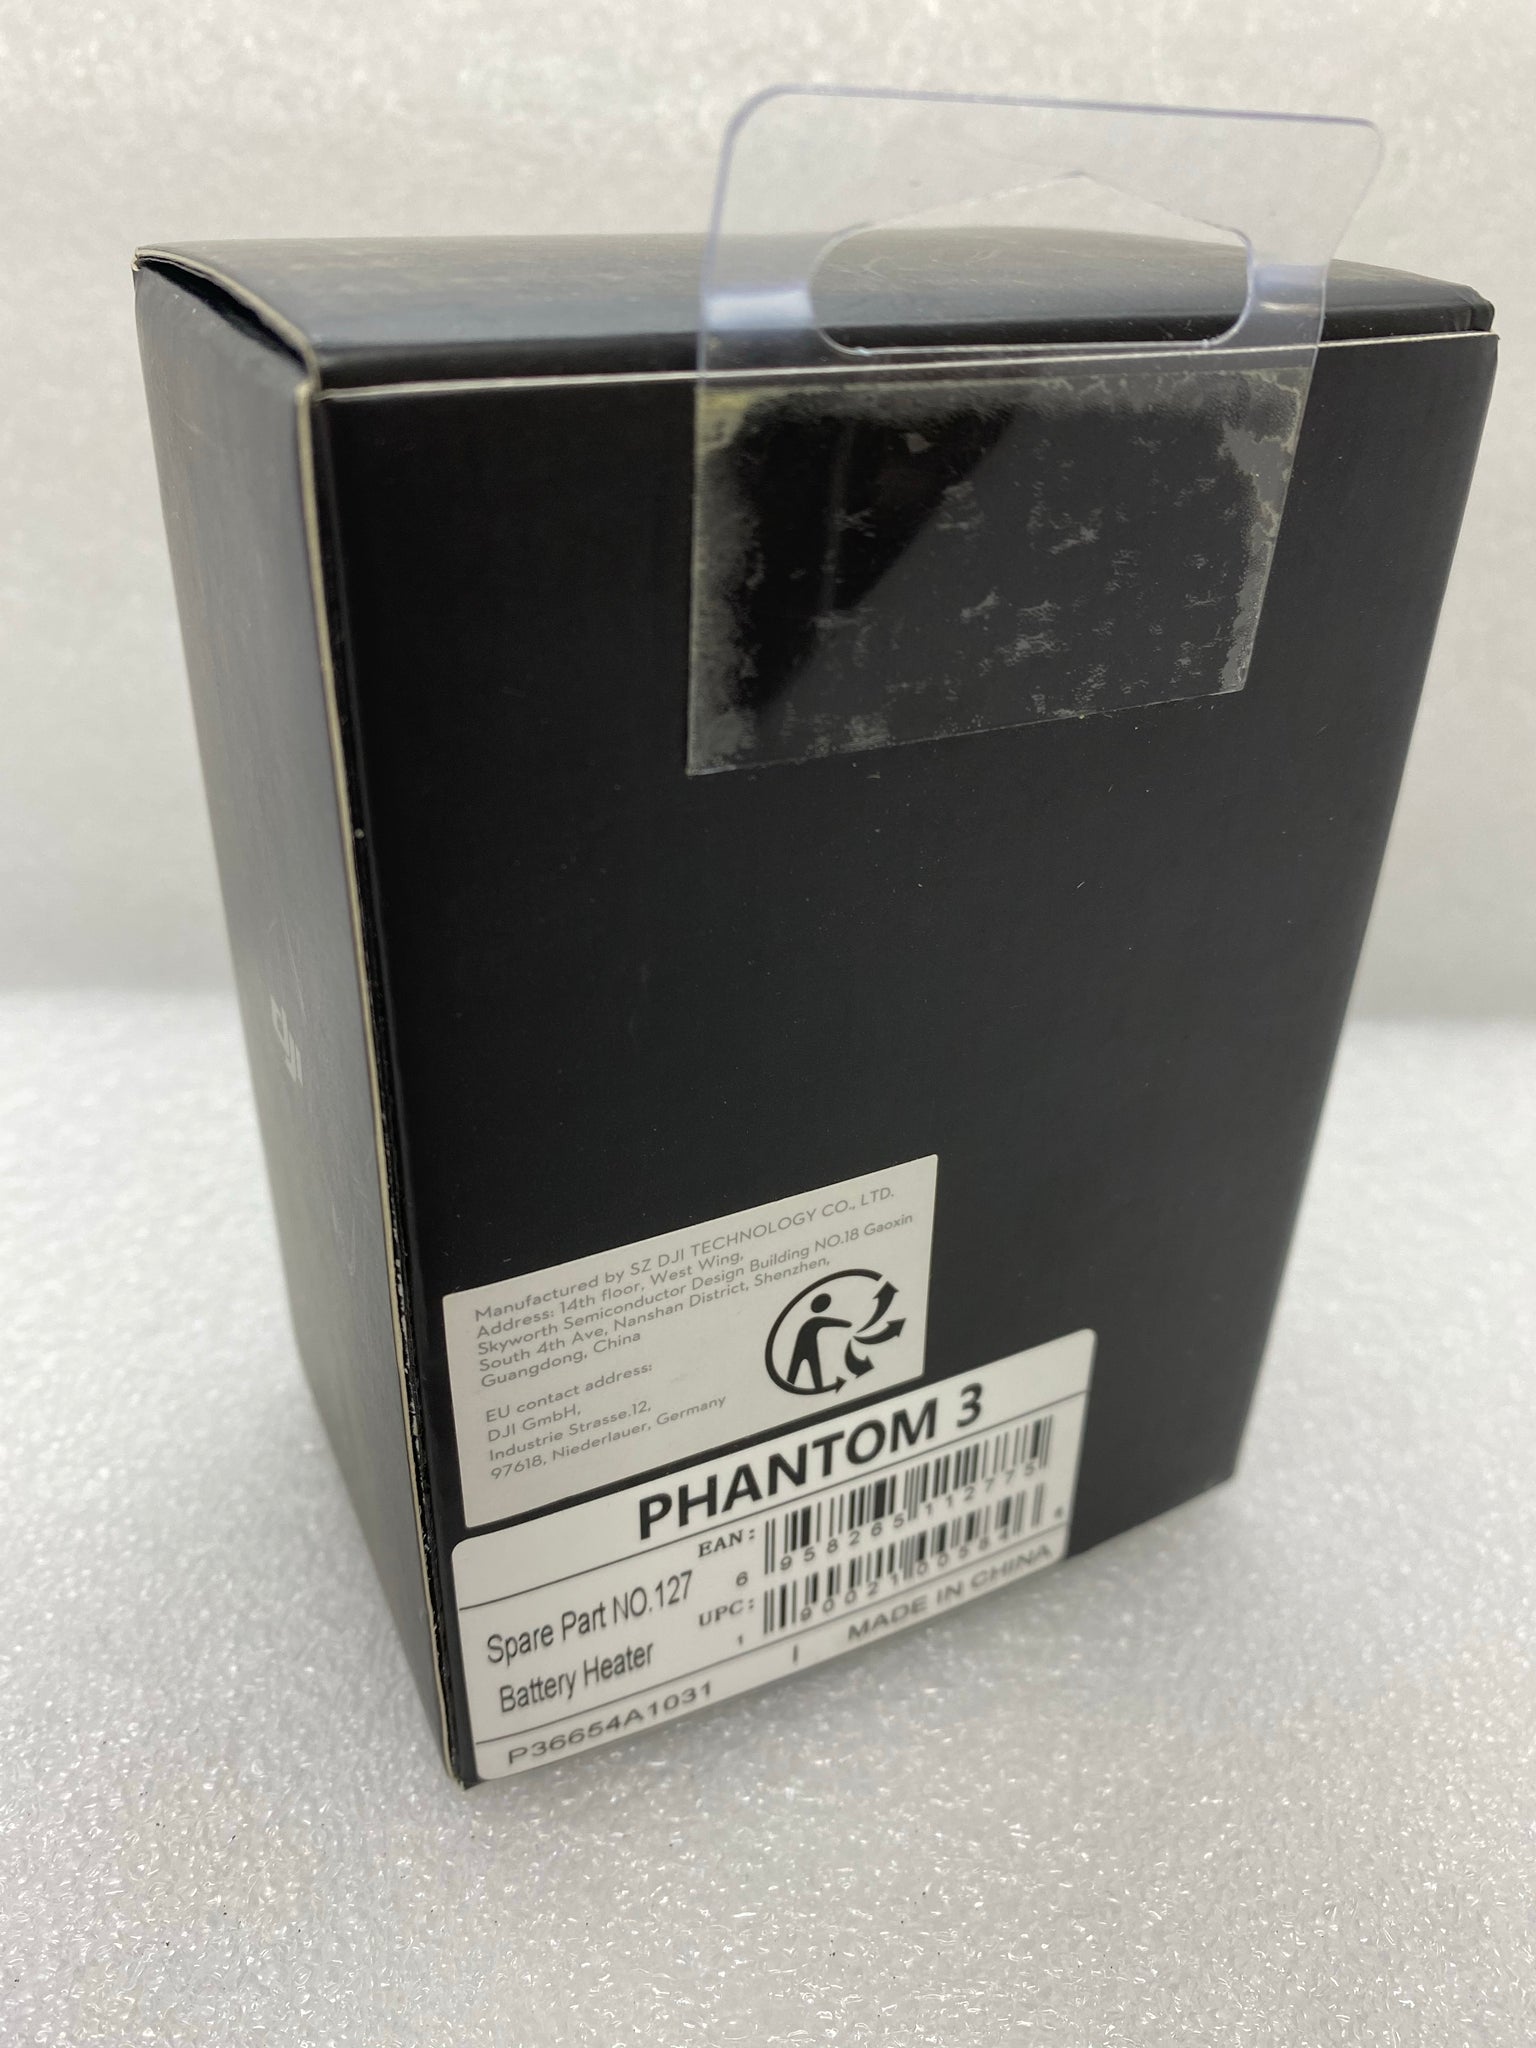 DJI Phantom 3 Part No. 127 Battery Heater